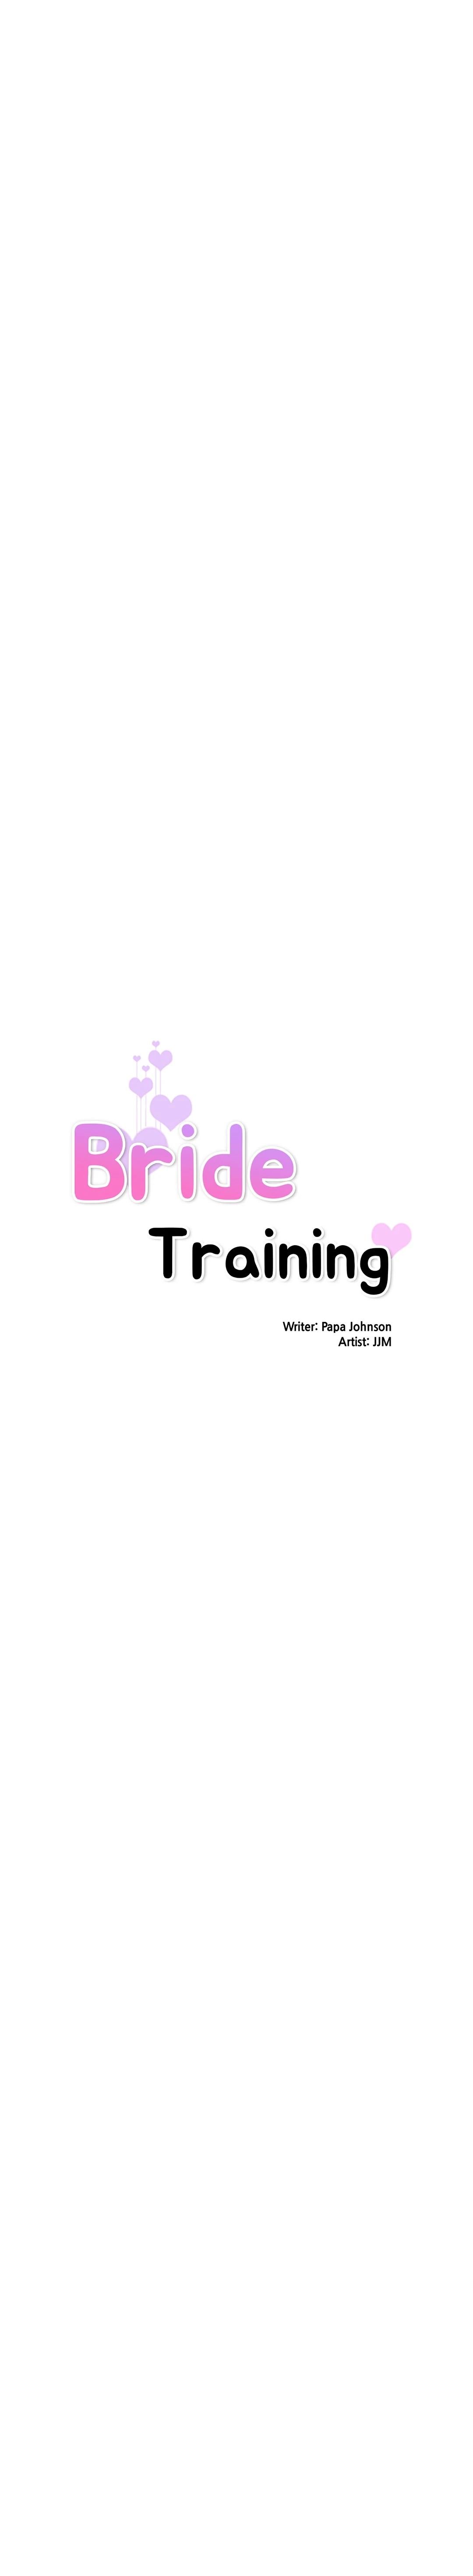 bride-training-chap-26-2